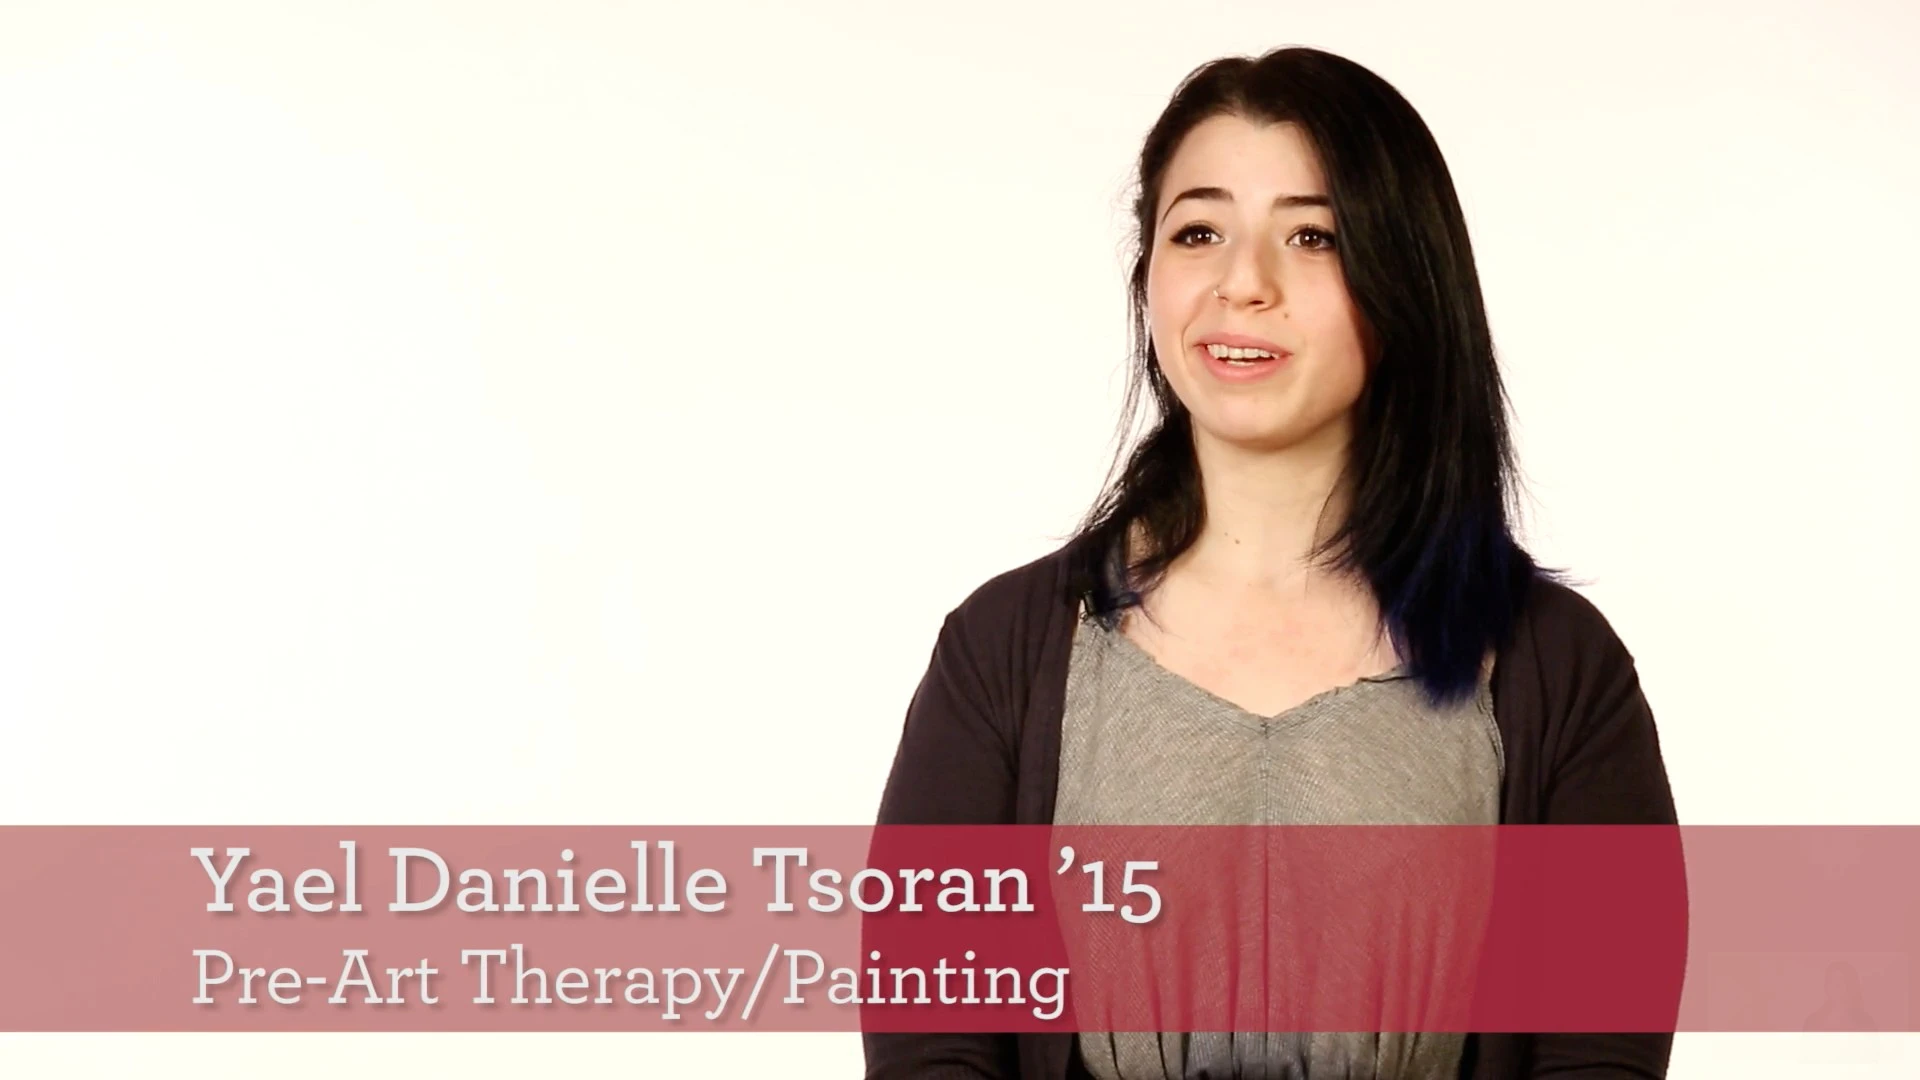 Yael Danielle Tsoran, pre-art therapy and painting student